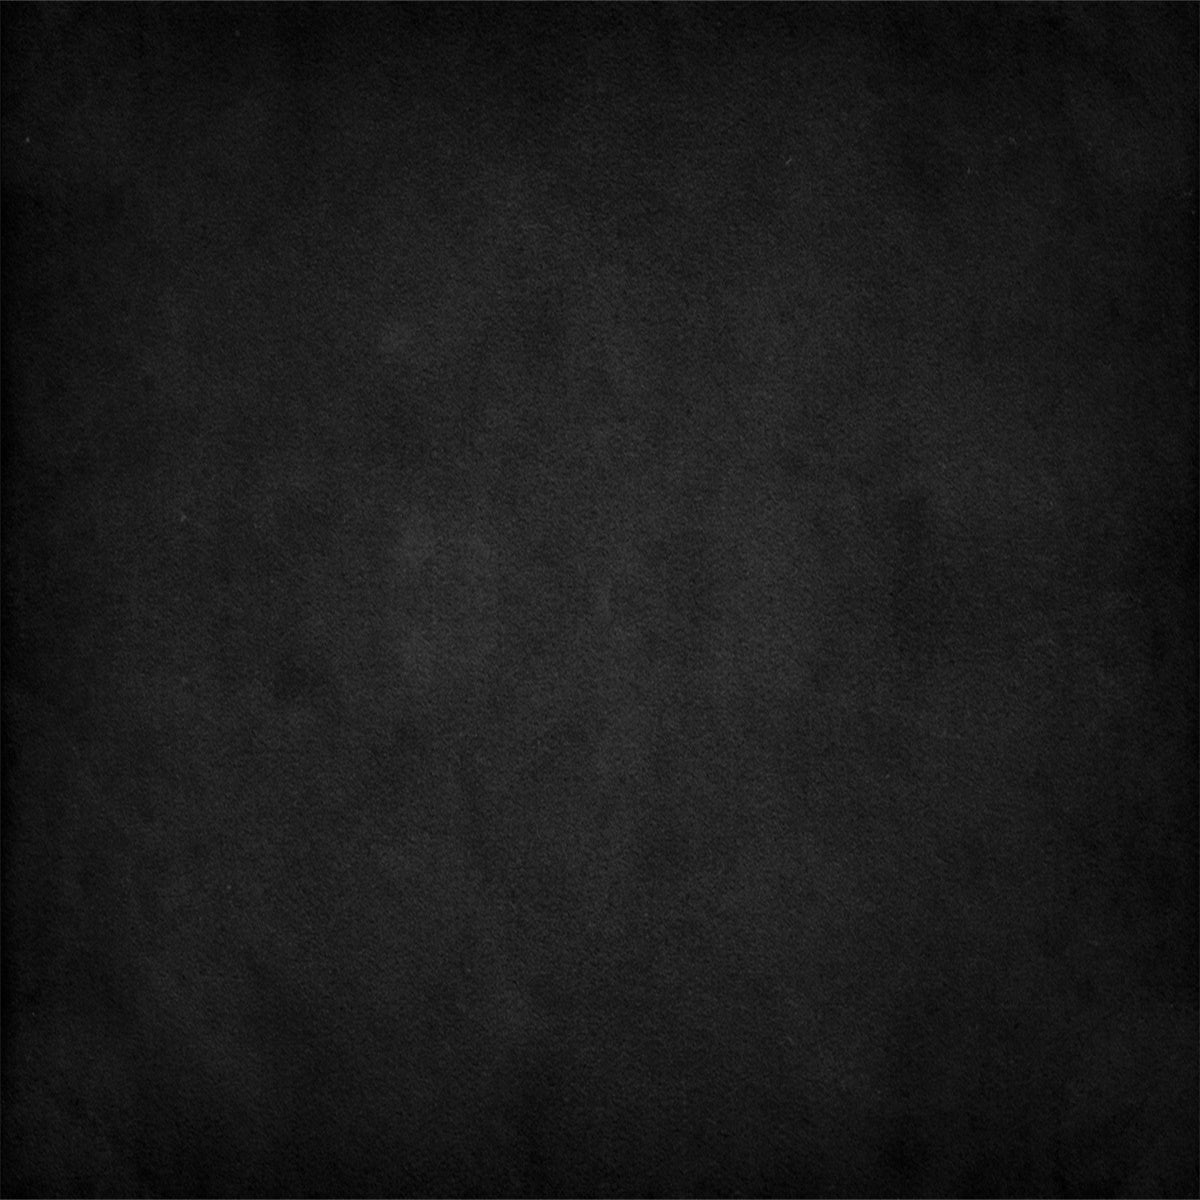 Abstract Black Gray Pattern Photography Backdrops